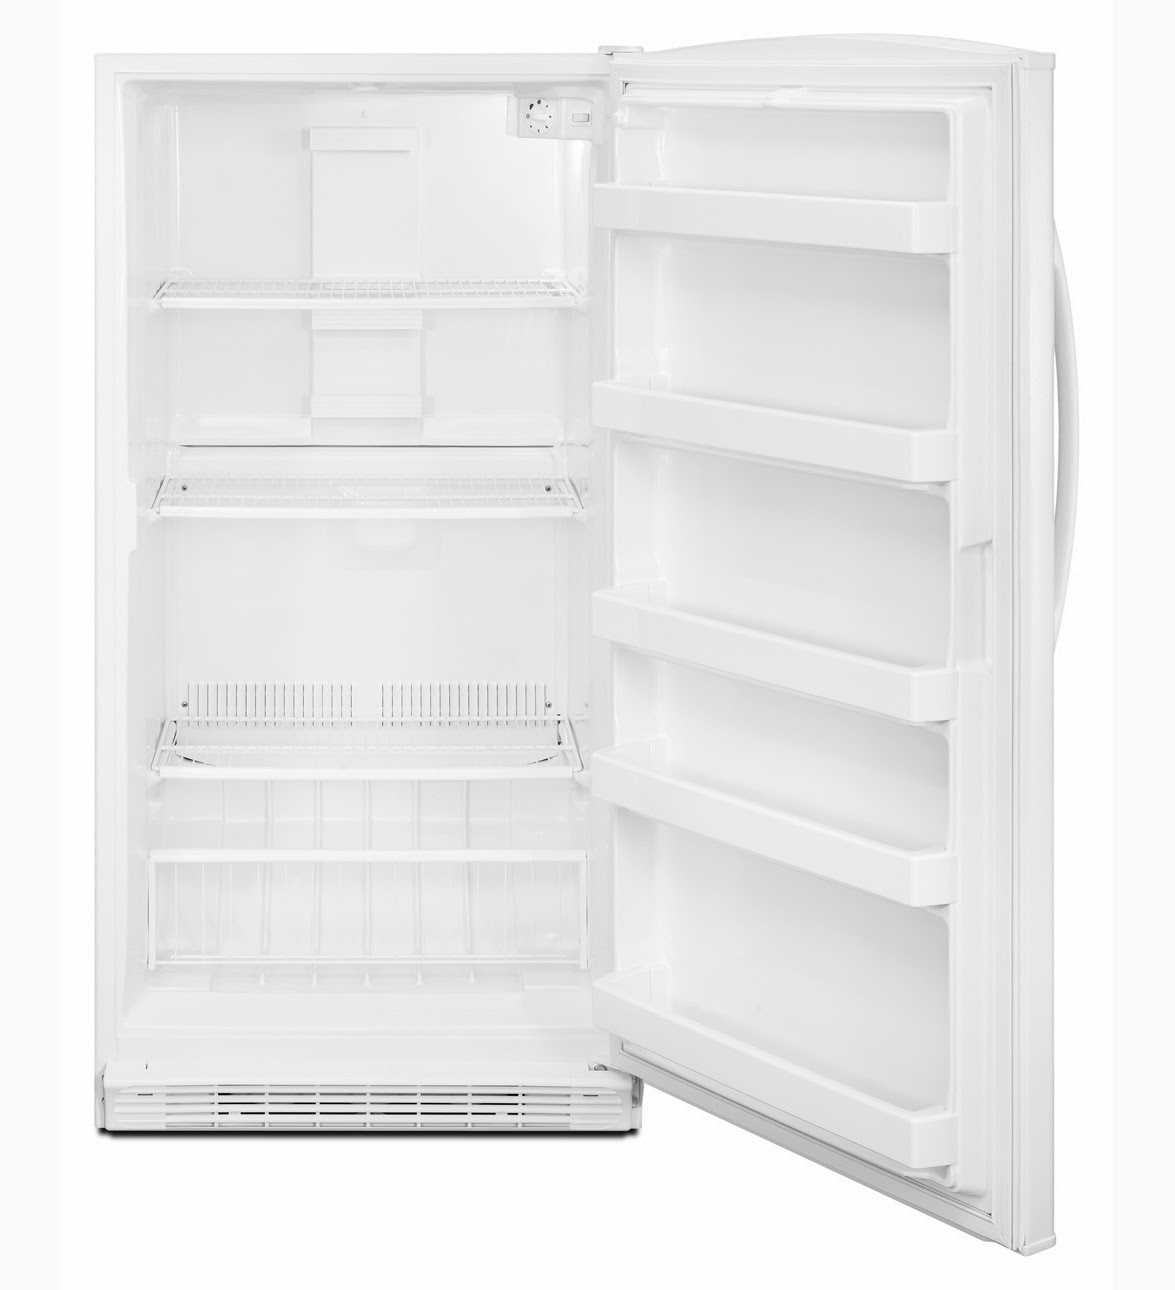 Whirlpool Refrigerator Brand: White Whirlpool EV160NZTQ Upright Freezer